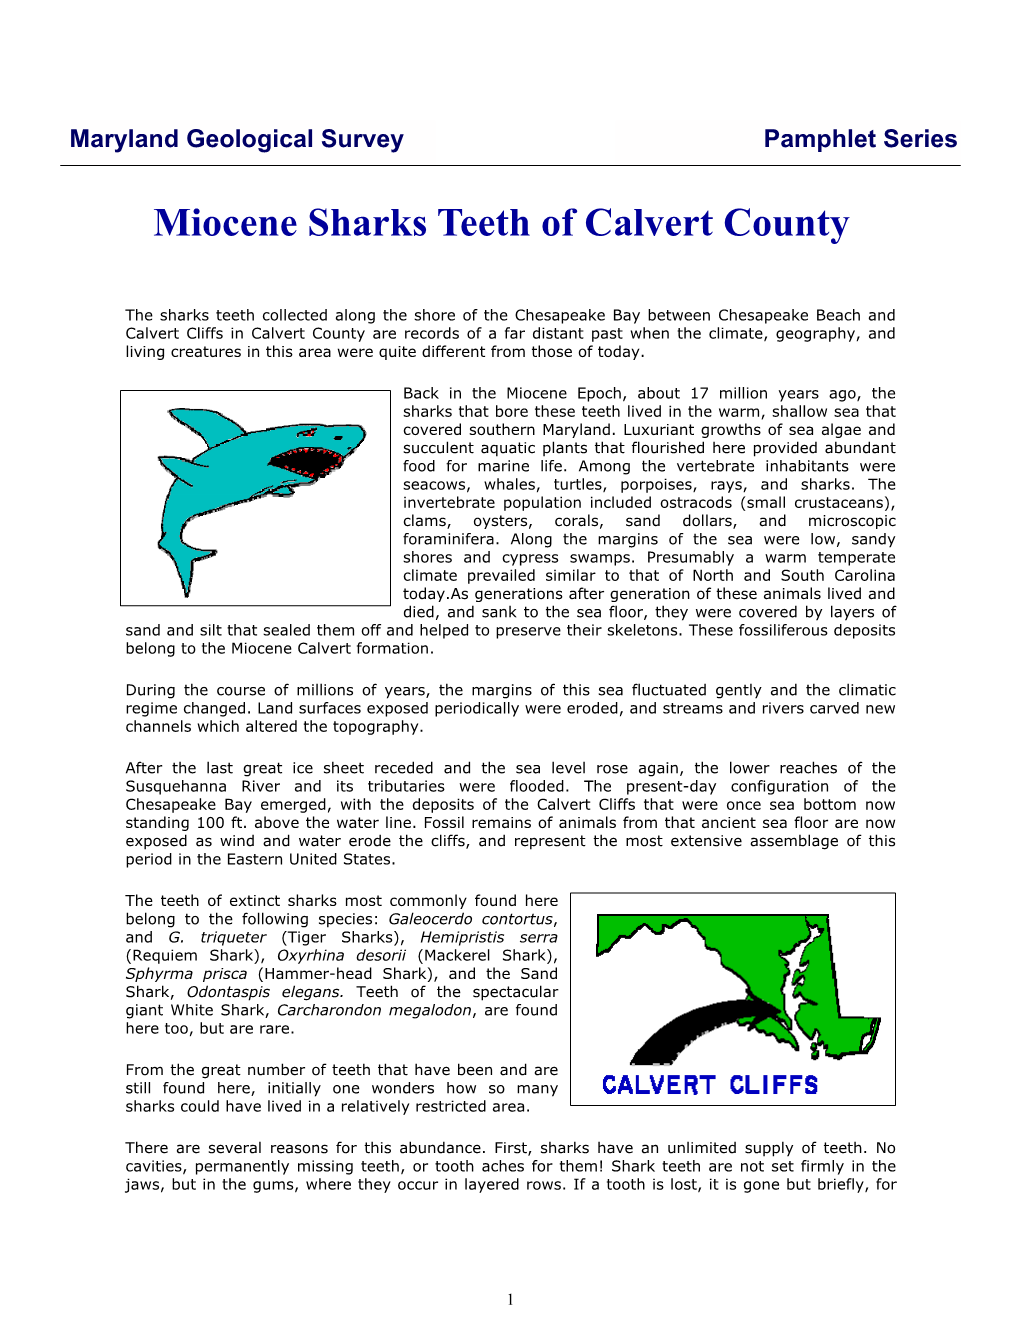 Miocene Sharks Teeth of Calvert County